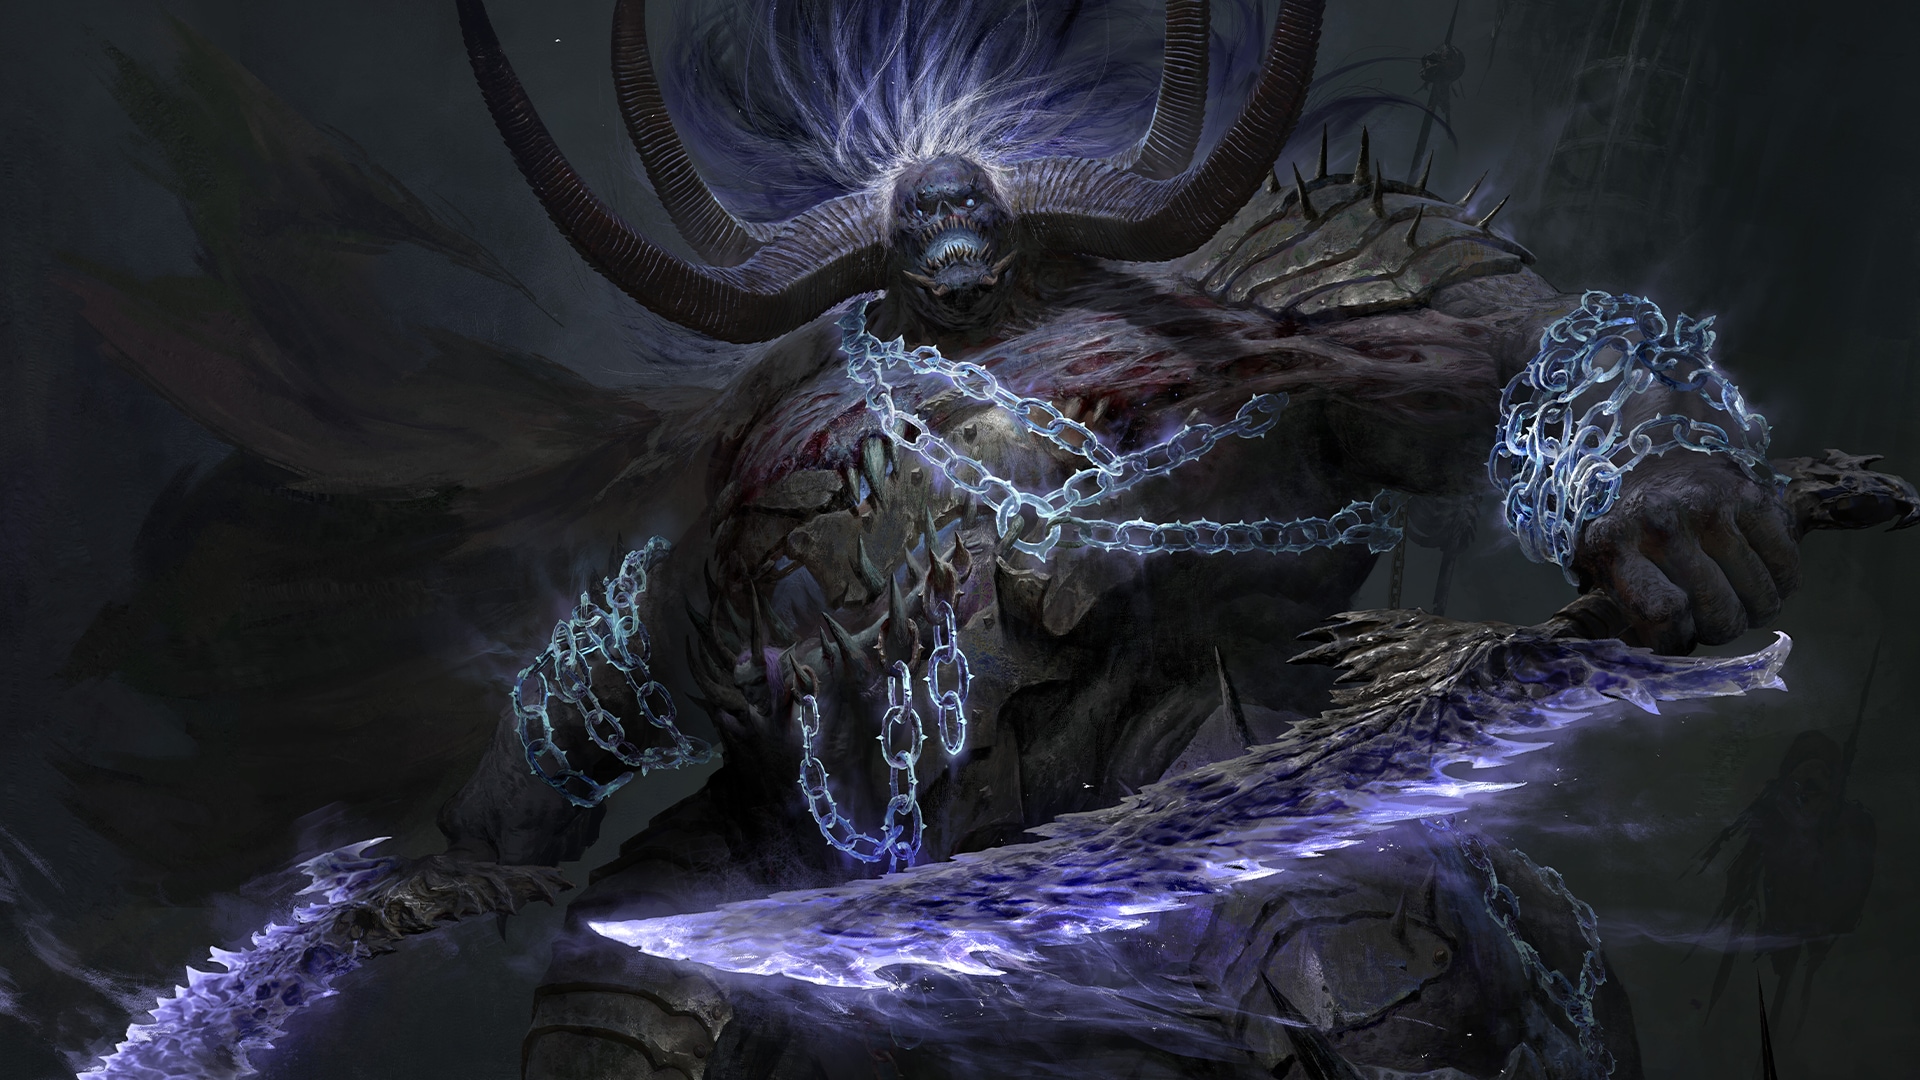 Diablo Immortal Destruction's Wake Details - Diablo: Immortal